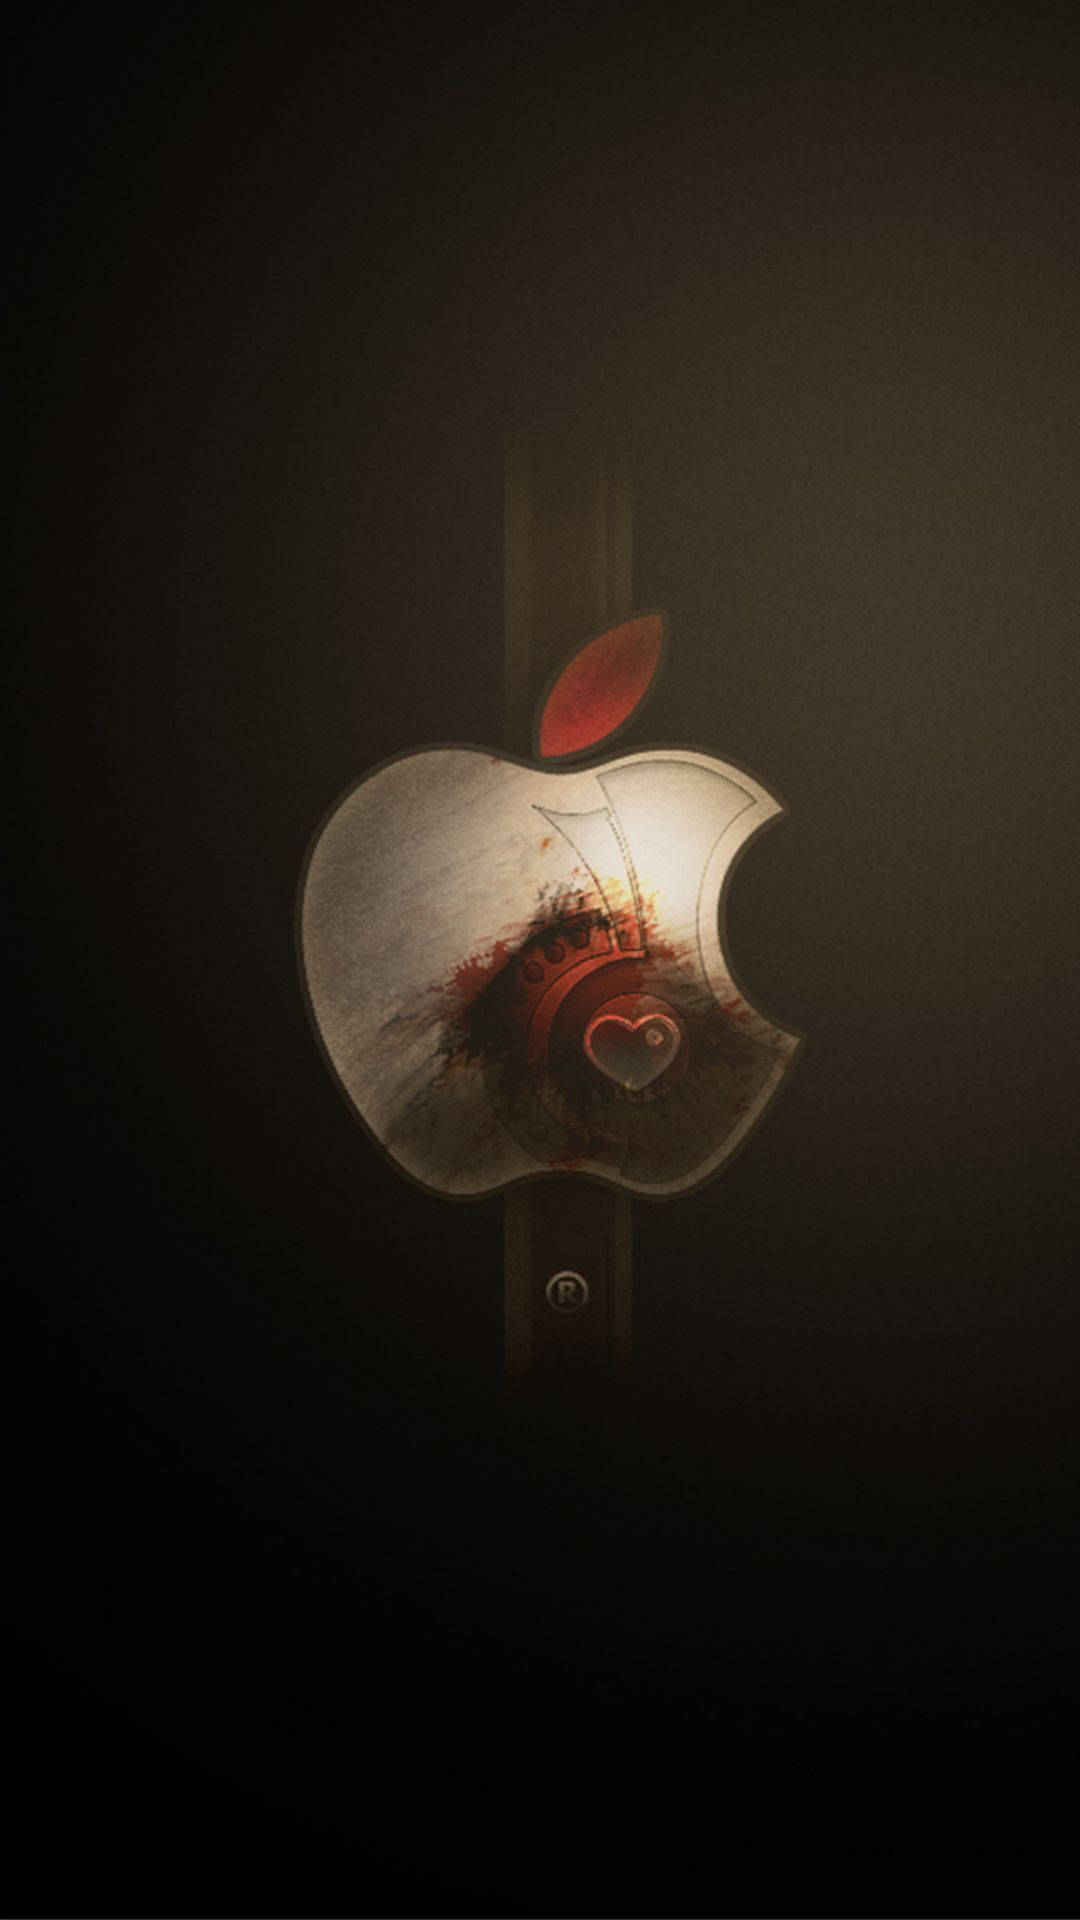 Metallic Apple Logo Iphone Picture